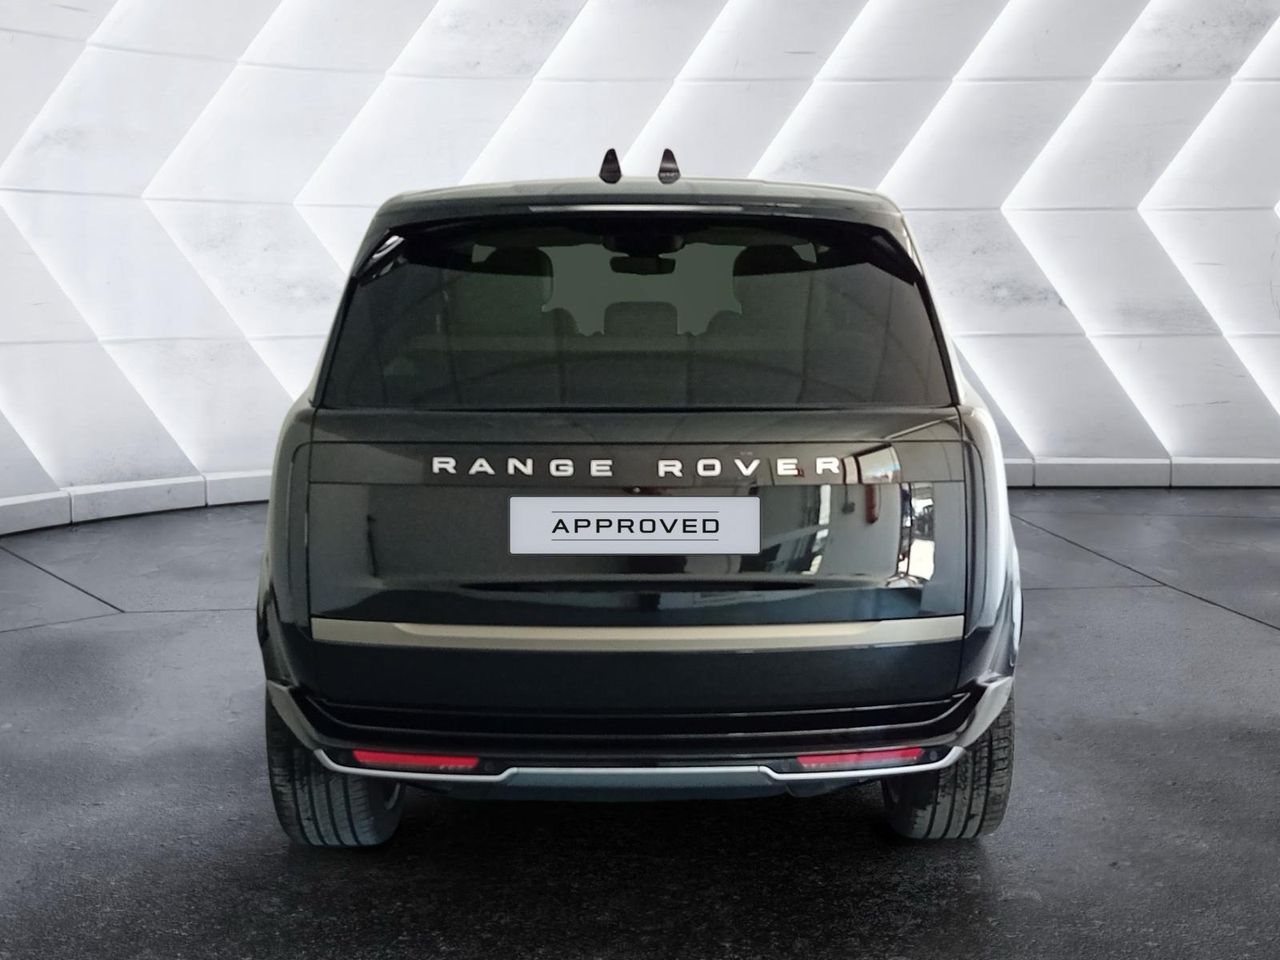 Foto Land-Rover Range Rover 9